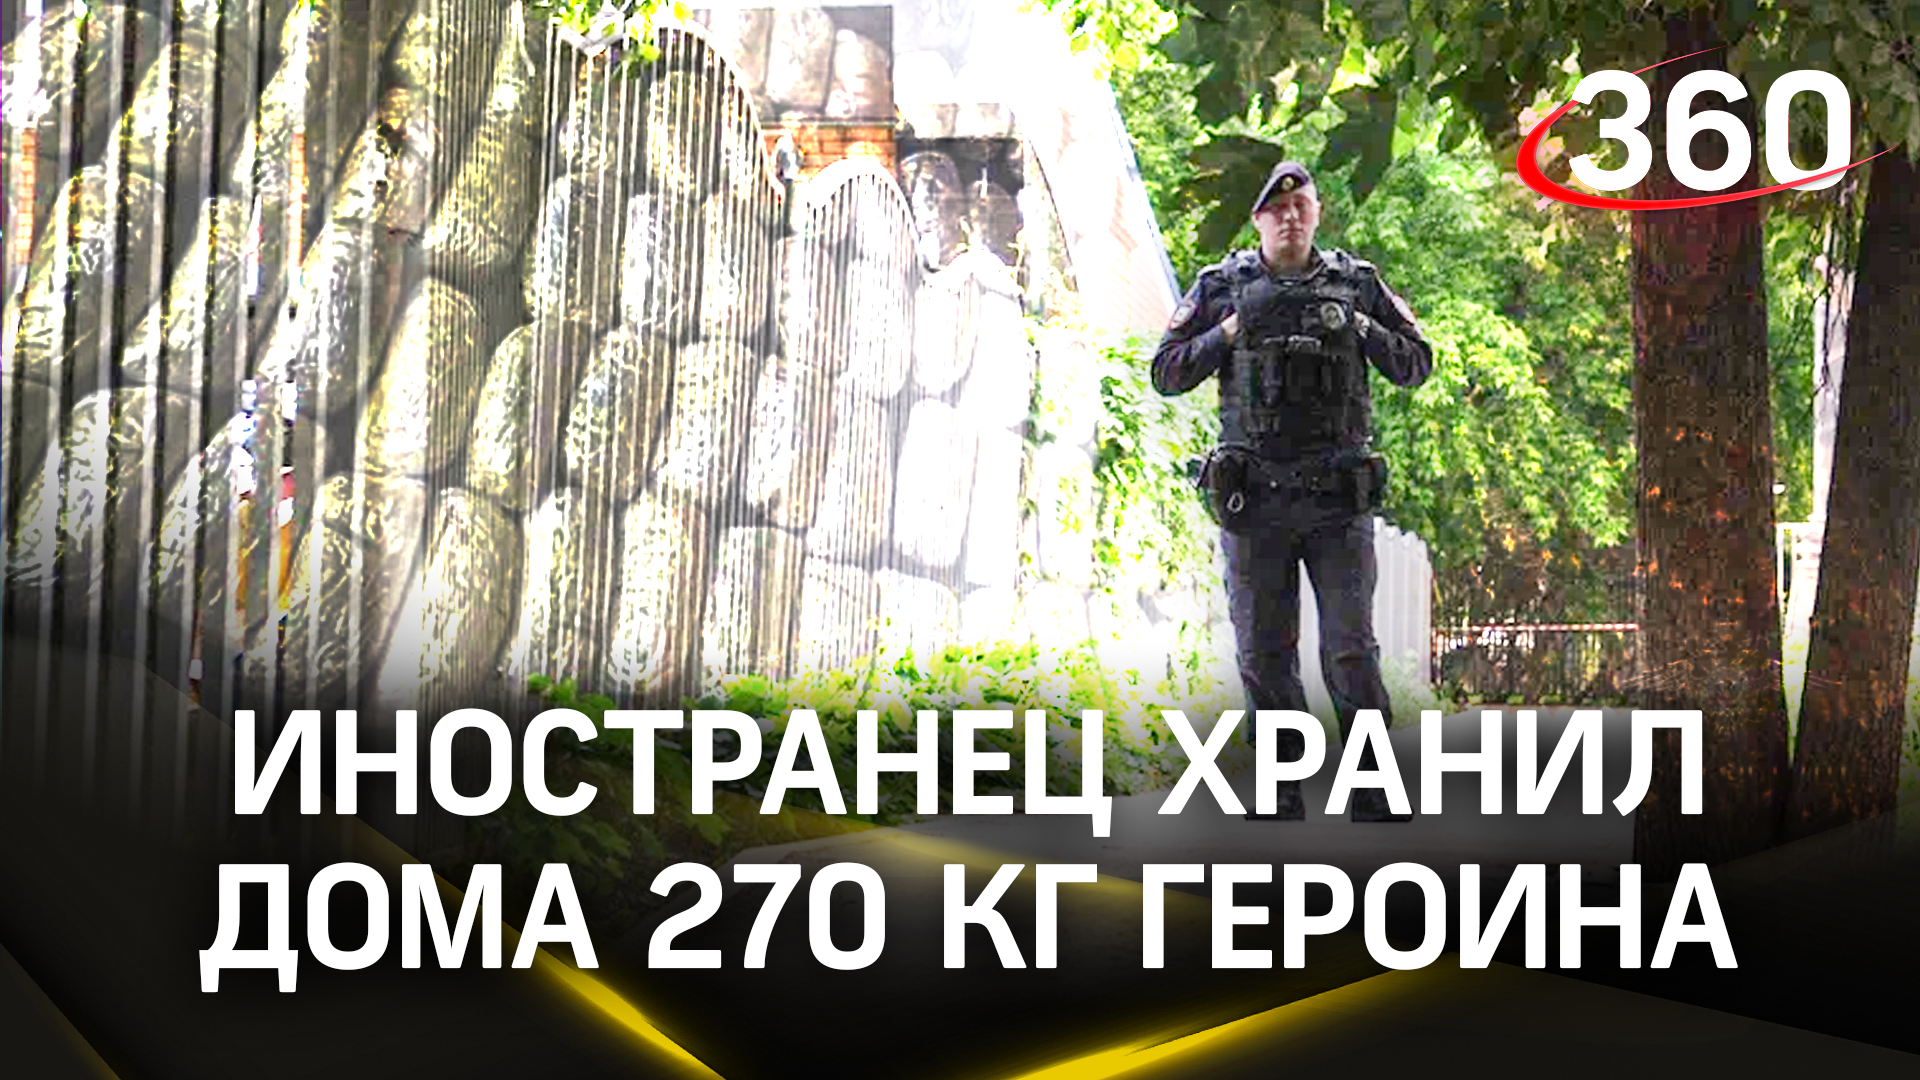 270 кг героина на 2.5 миллиарда рублей обнаружили под Наро-Фоминском